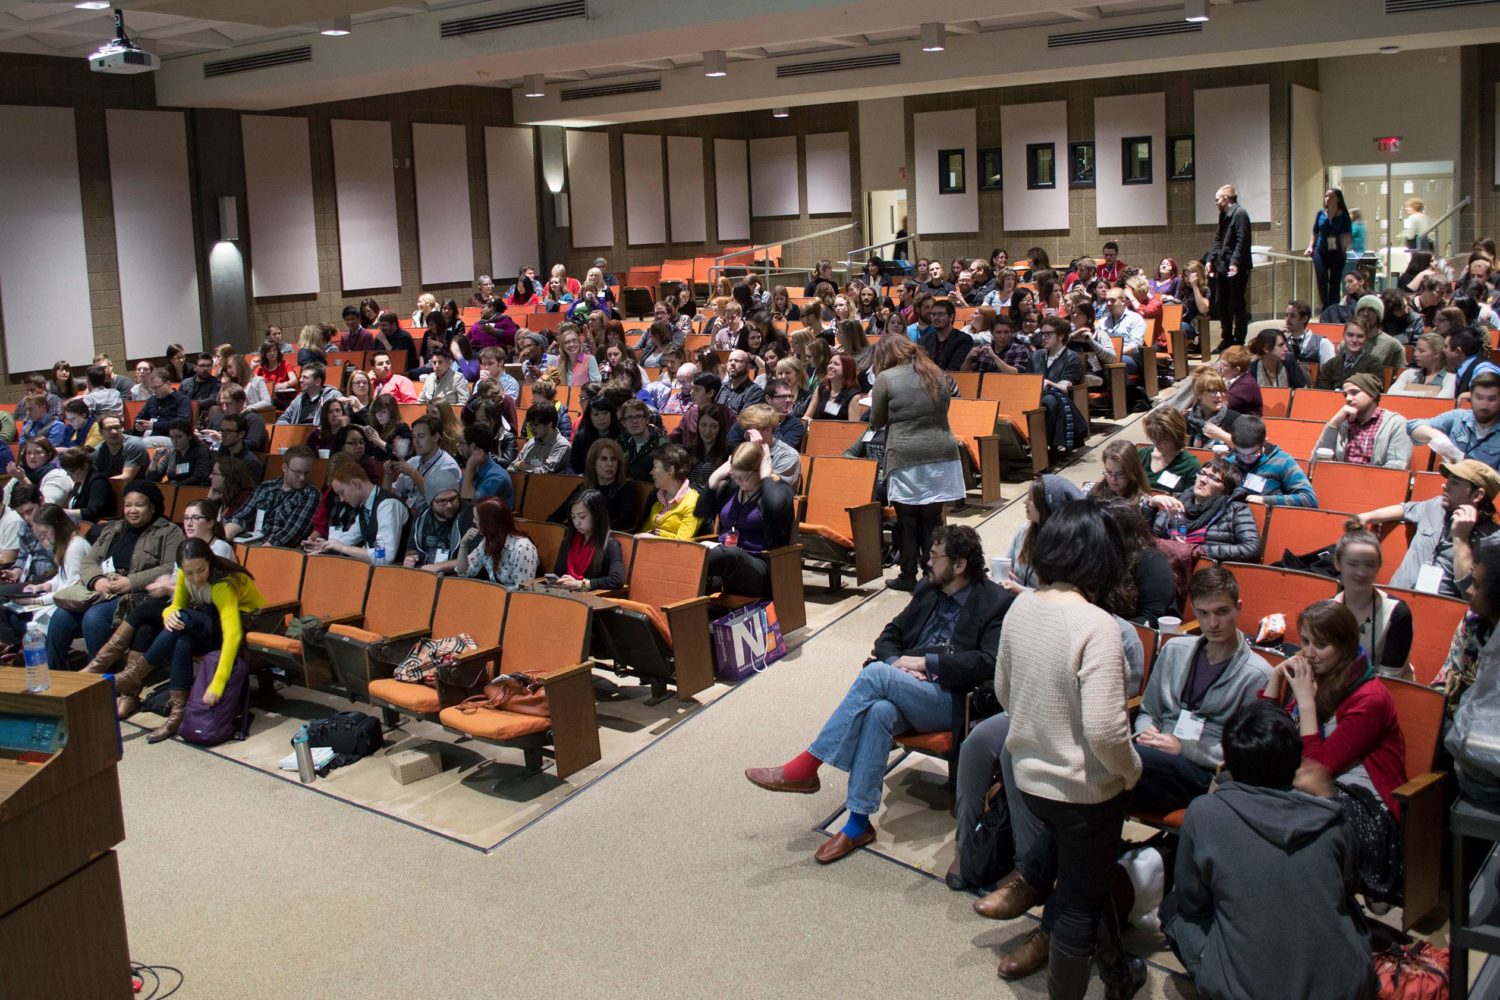 Seek 2013 audience at Northern Illinois University